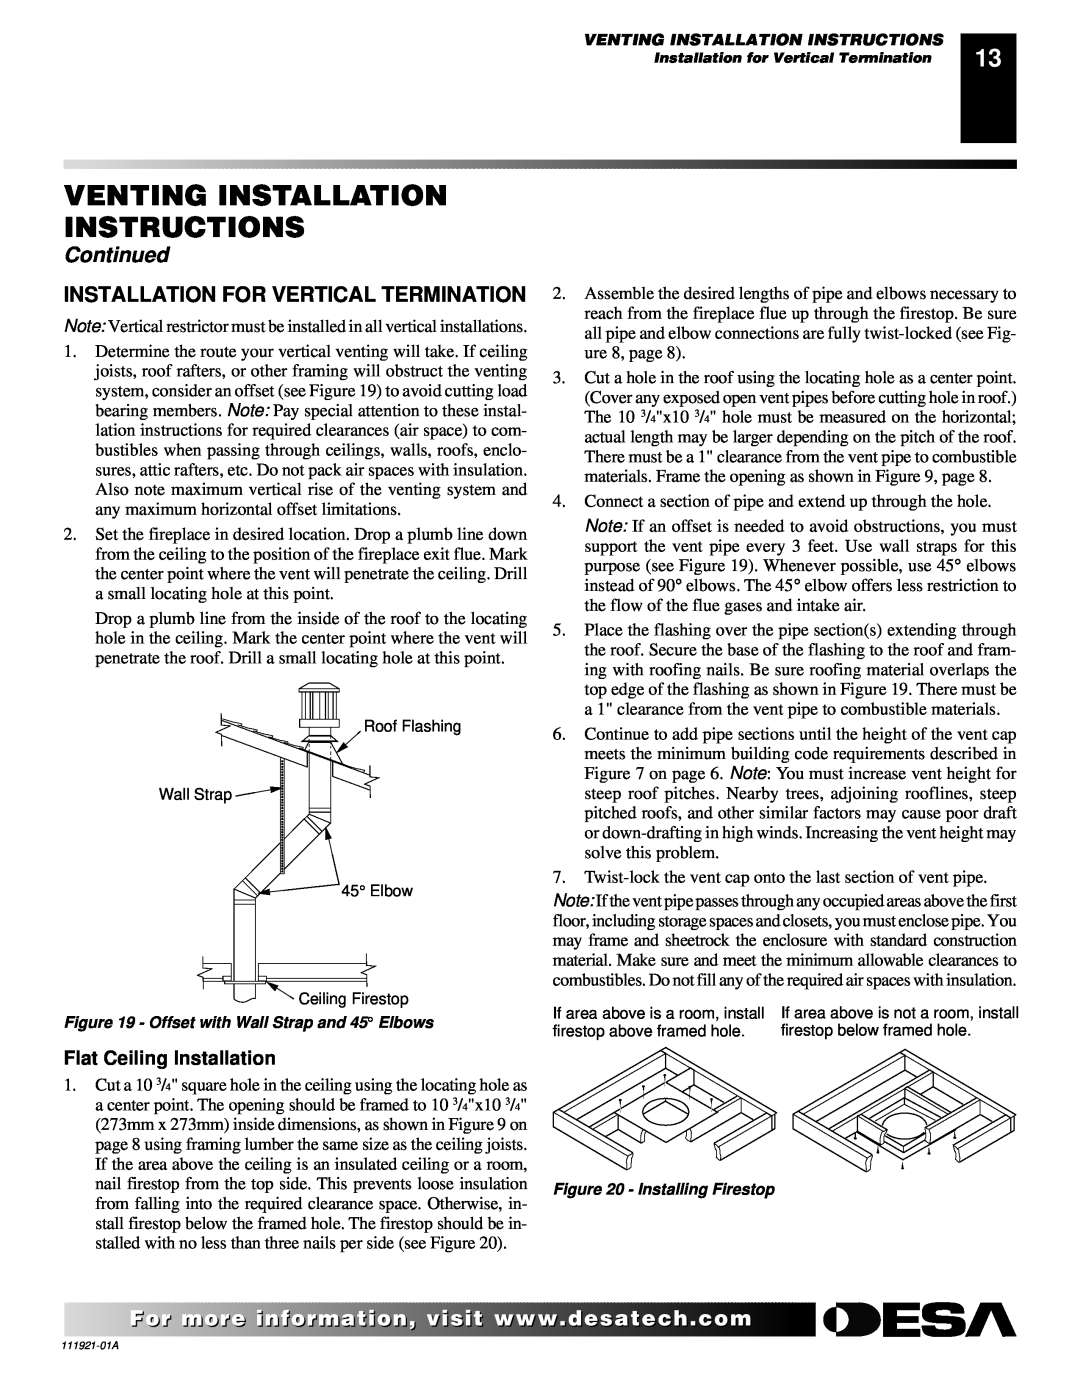 Desa (V)K42N installation manual Installation For Vertical Termination, Venting Installation Instructions, Continued 